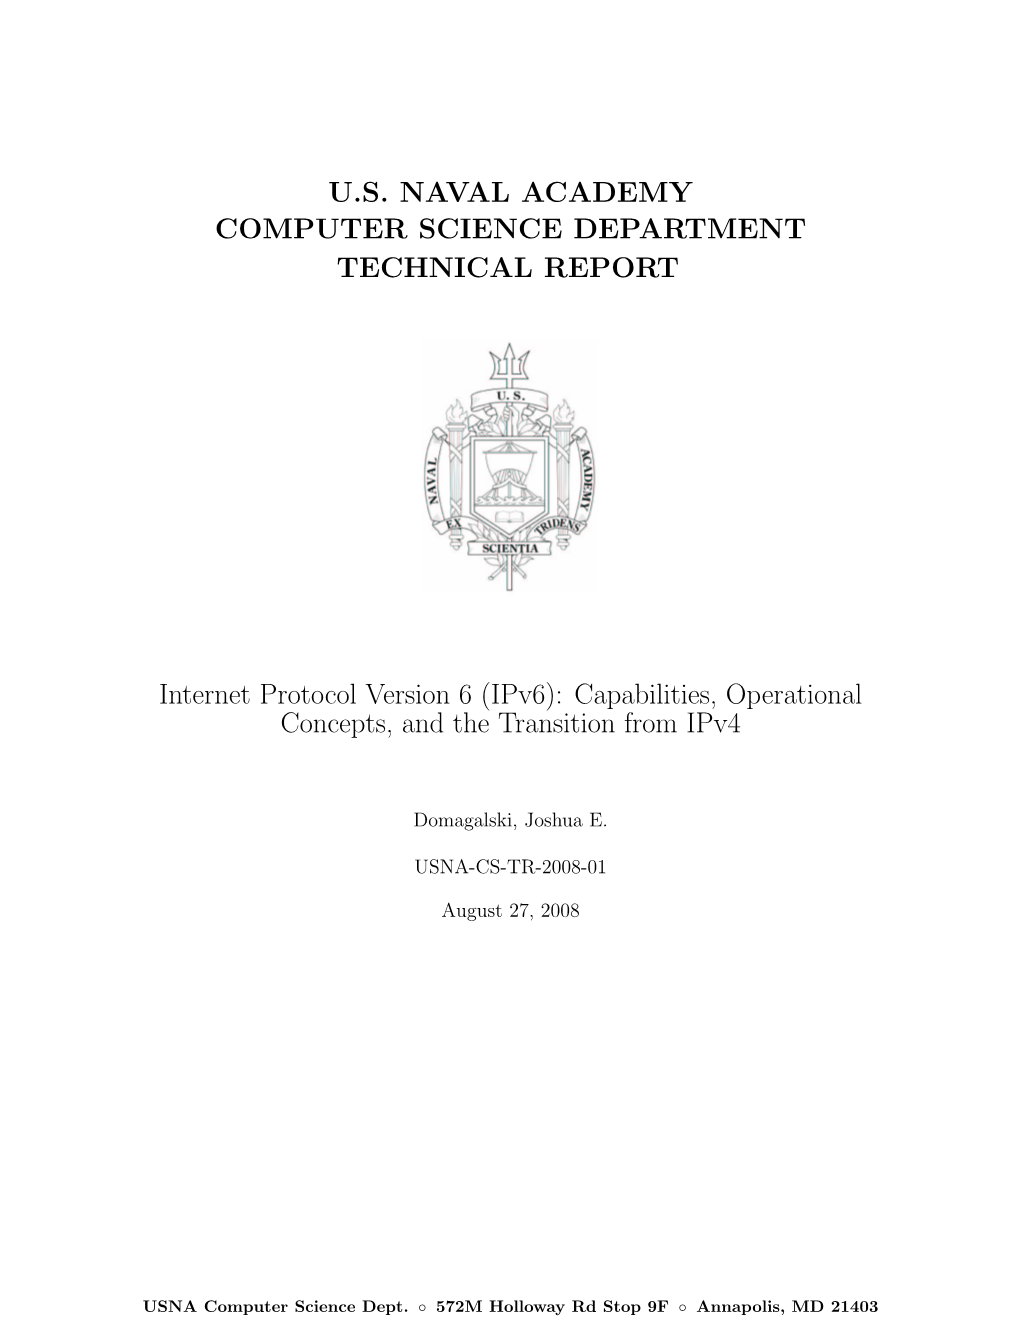 U.S. Naval Academy Computer Science Department Technical Report